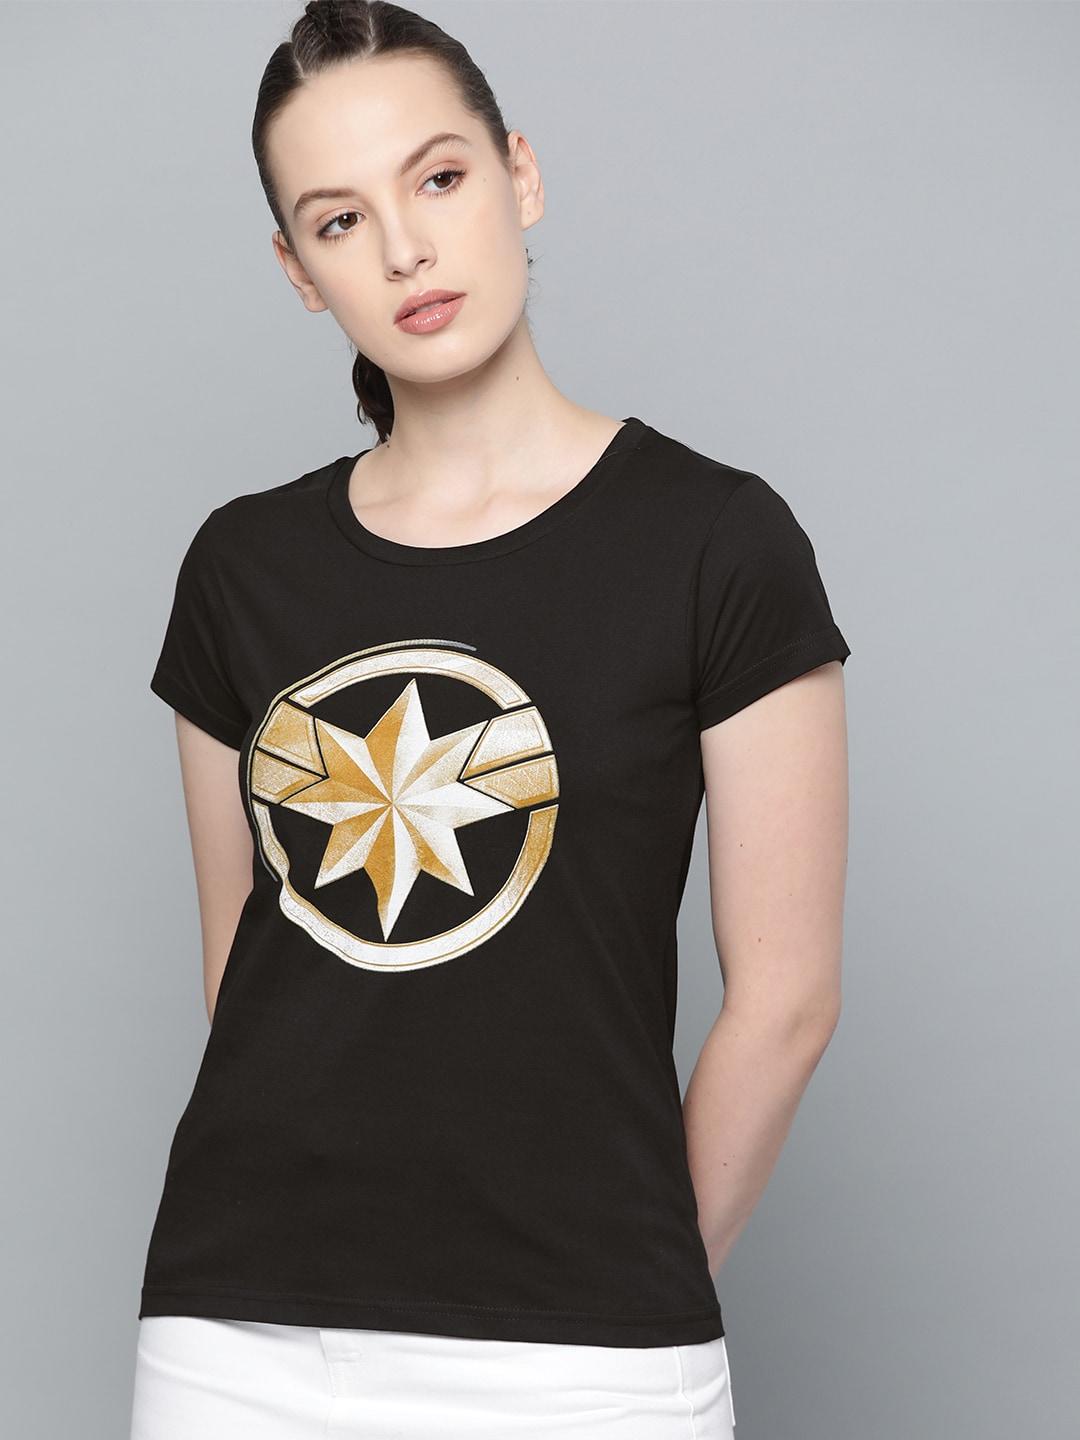 kook-n-keech-marvel-women-black-&-beige-printed-round-neck-t-shirt